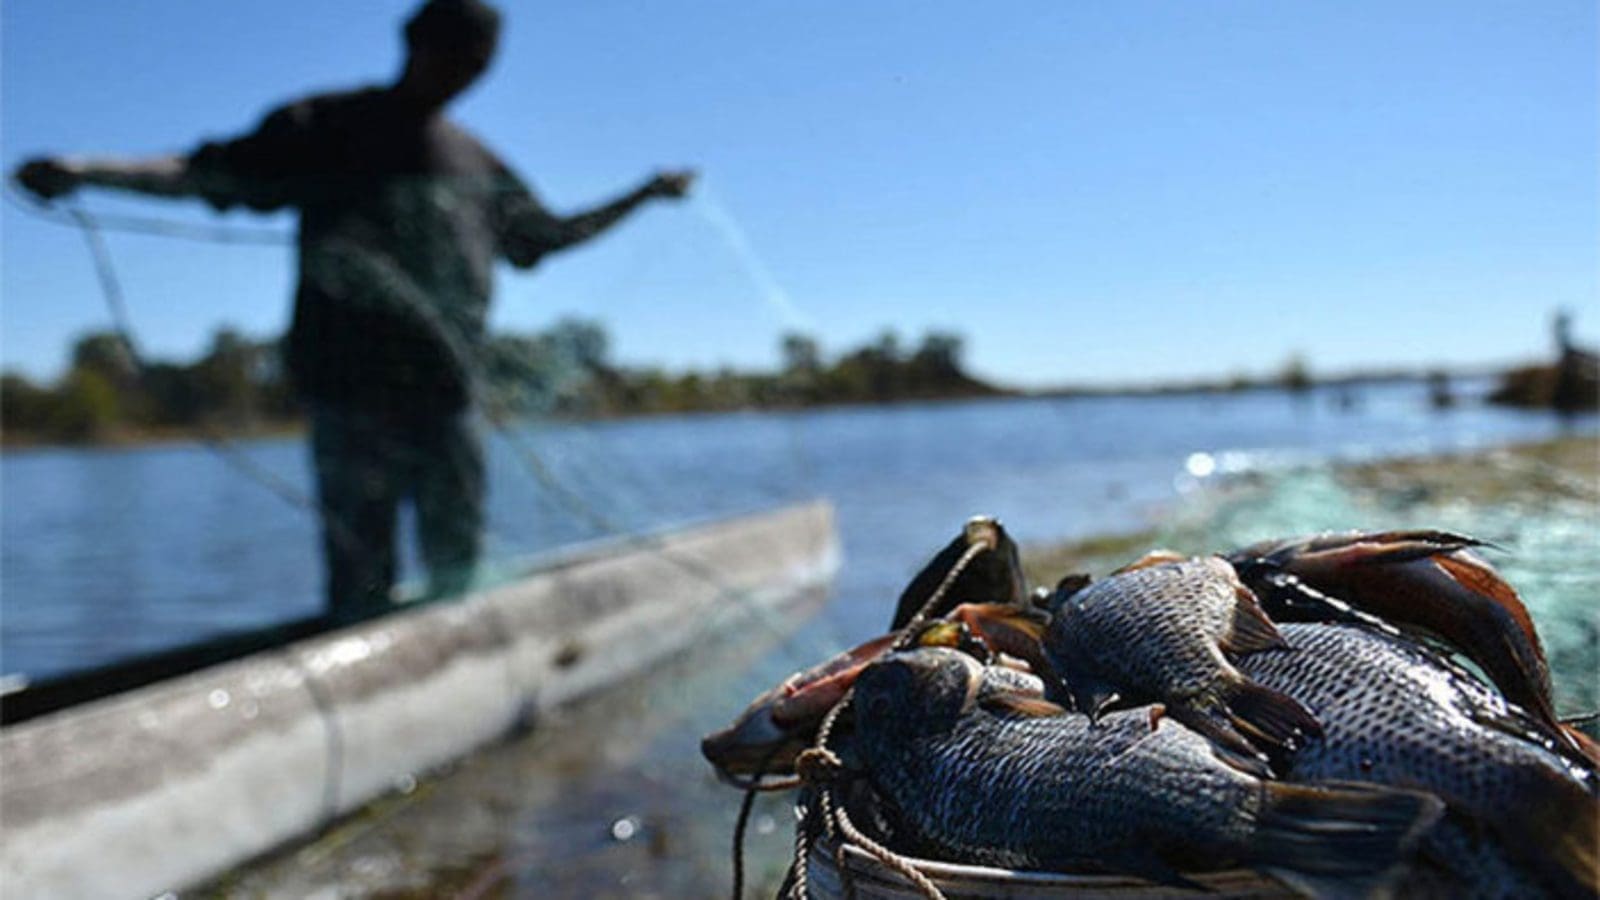 Kenya fish farmers link mysterious fish deaths to lake contamination